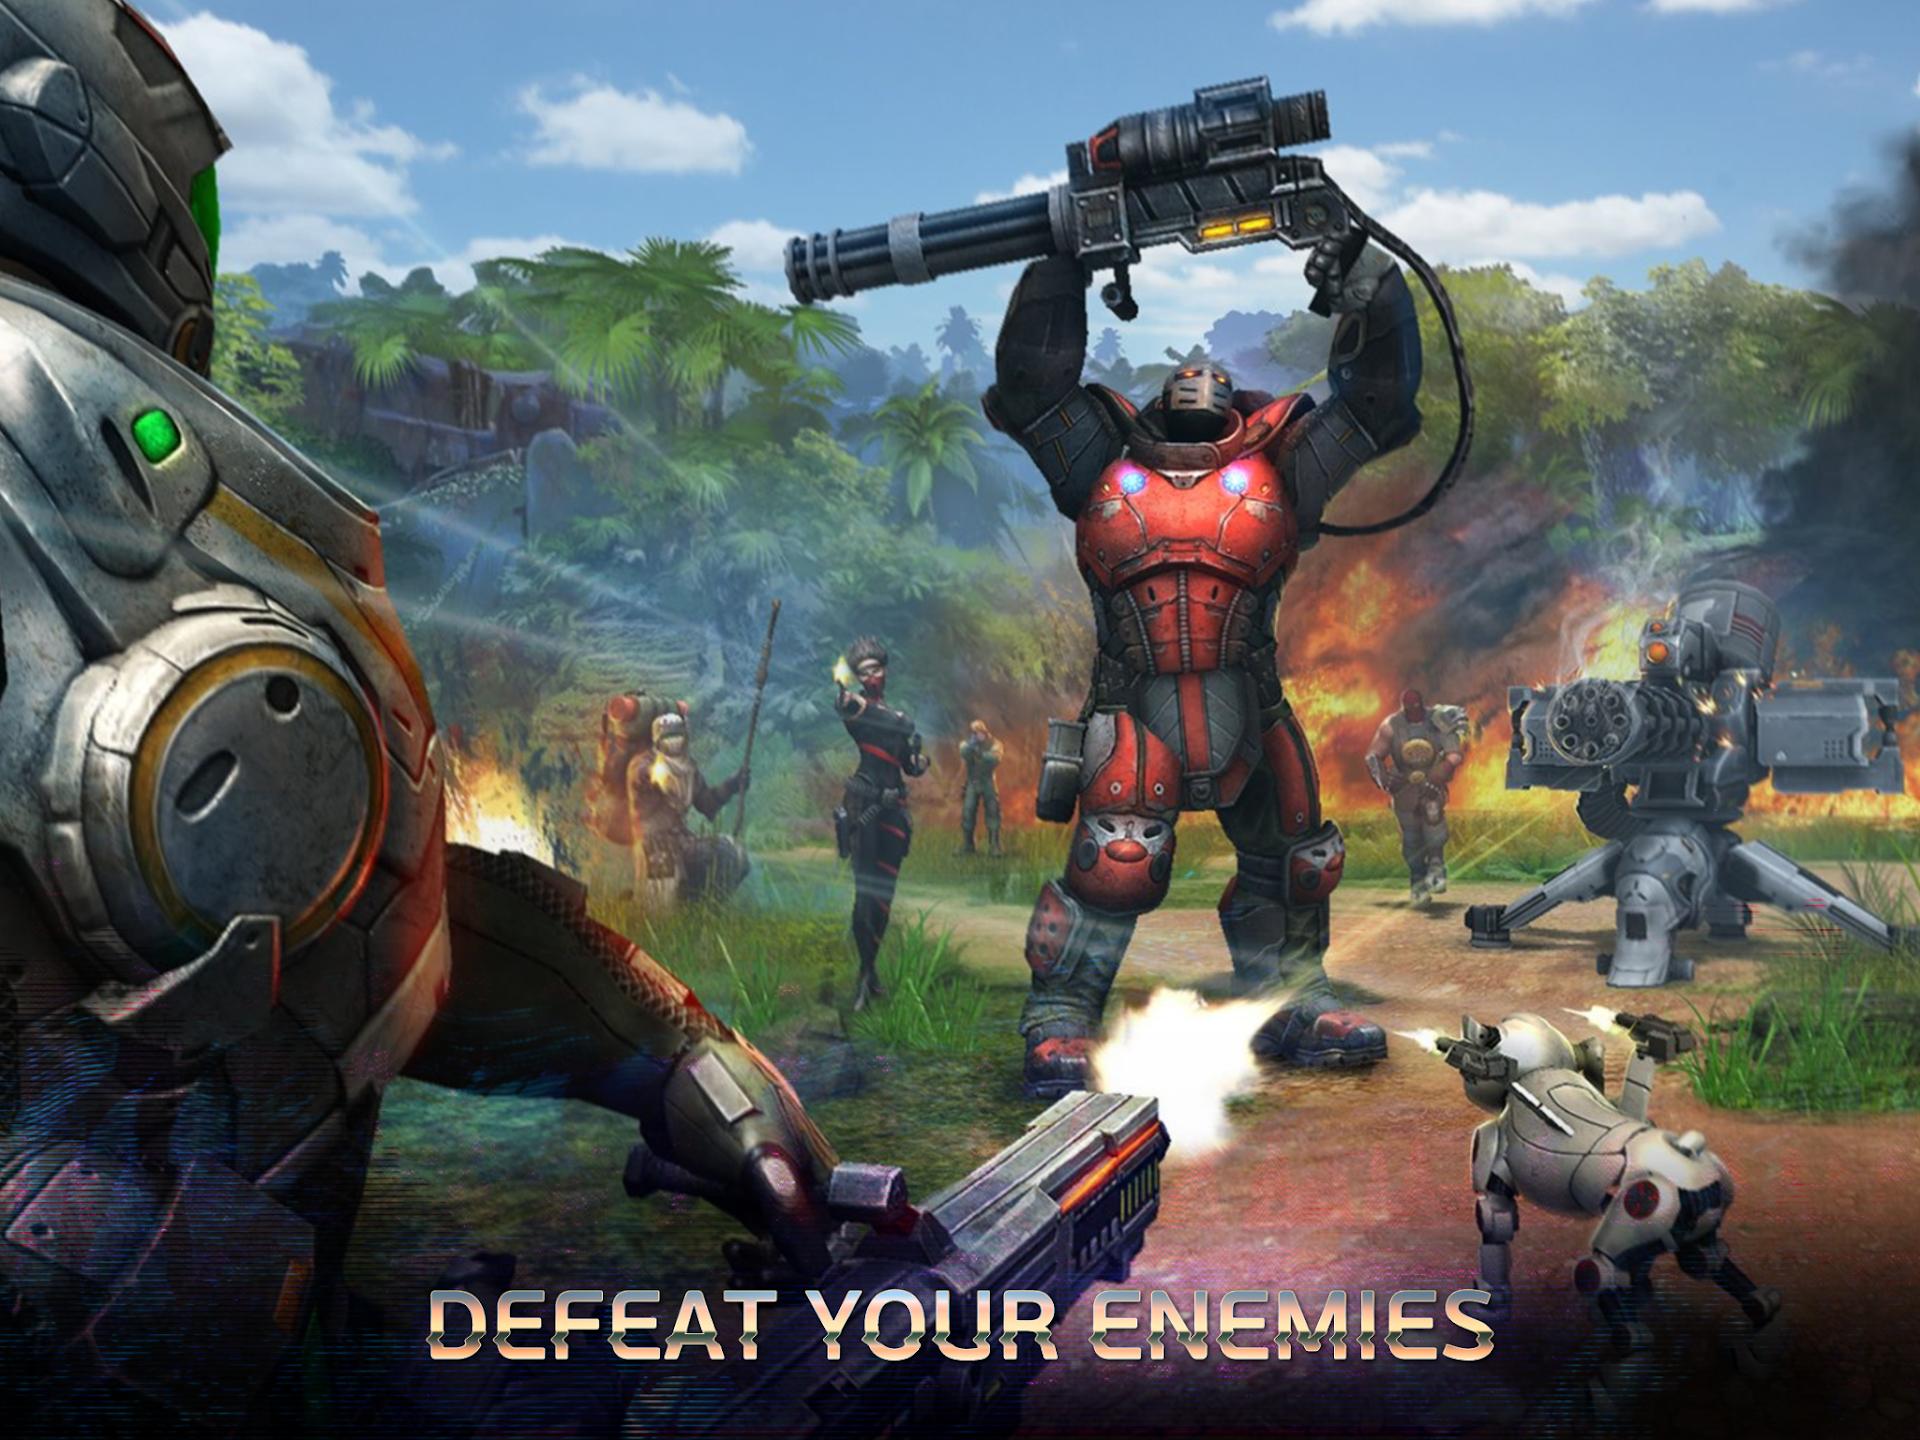 Evolution Battle for Utopia. Shooting games free 3.5.9 Screenshot 10